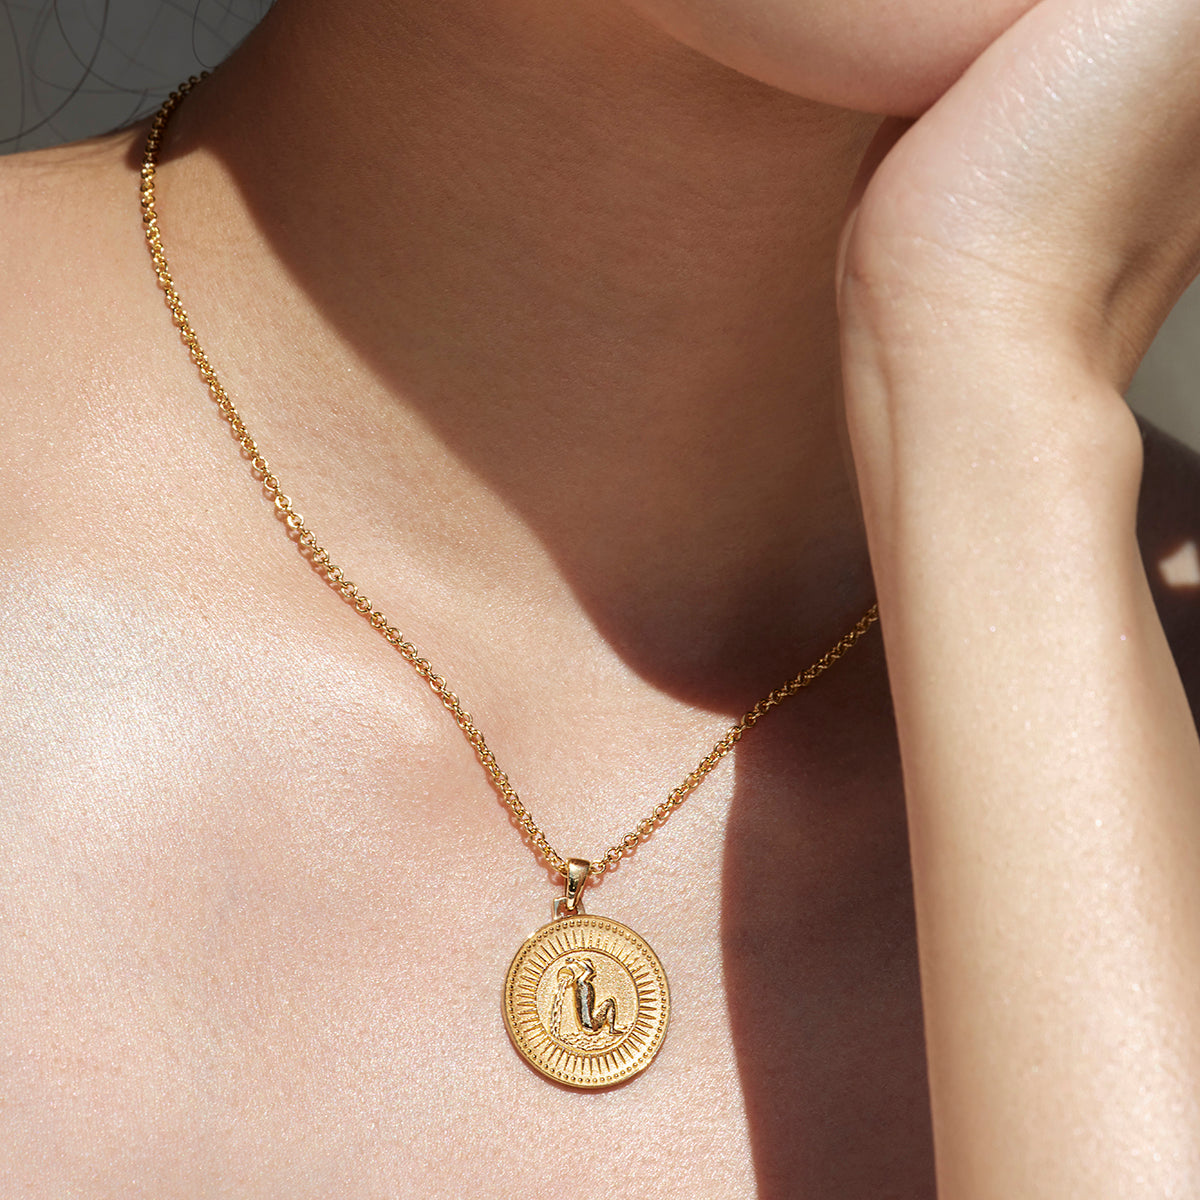 Ethical Gold Aquarius Pendant Necklace Worn Around a Woman's Neck 